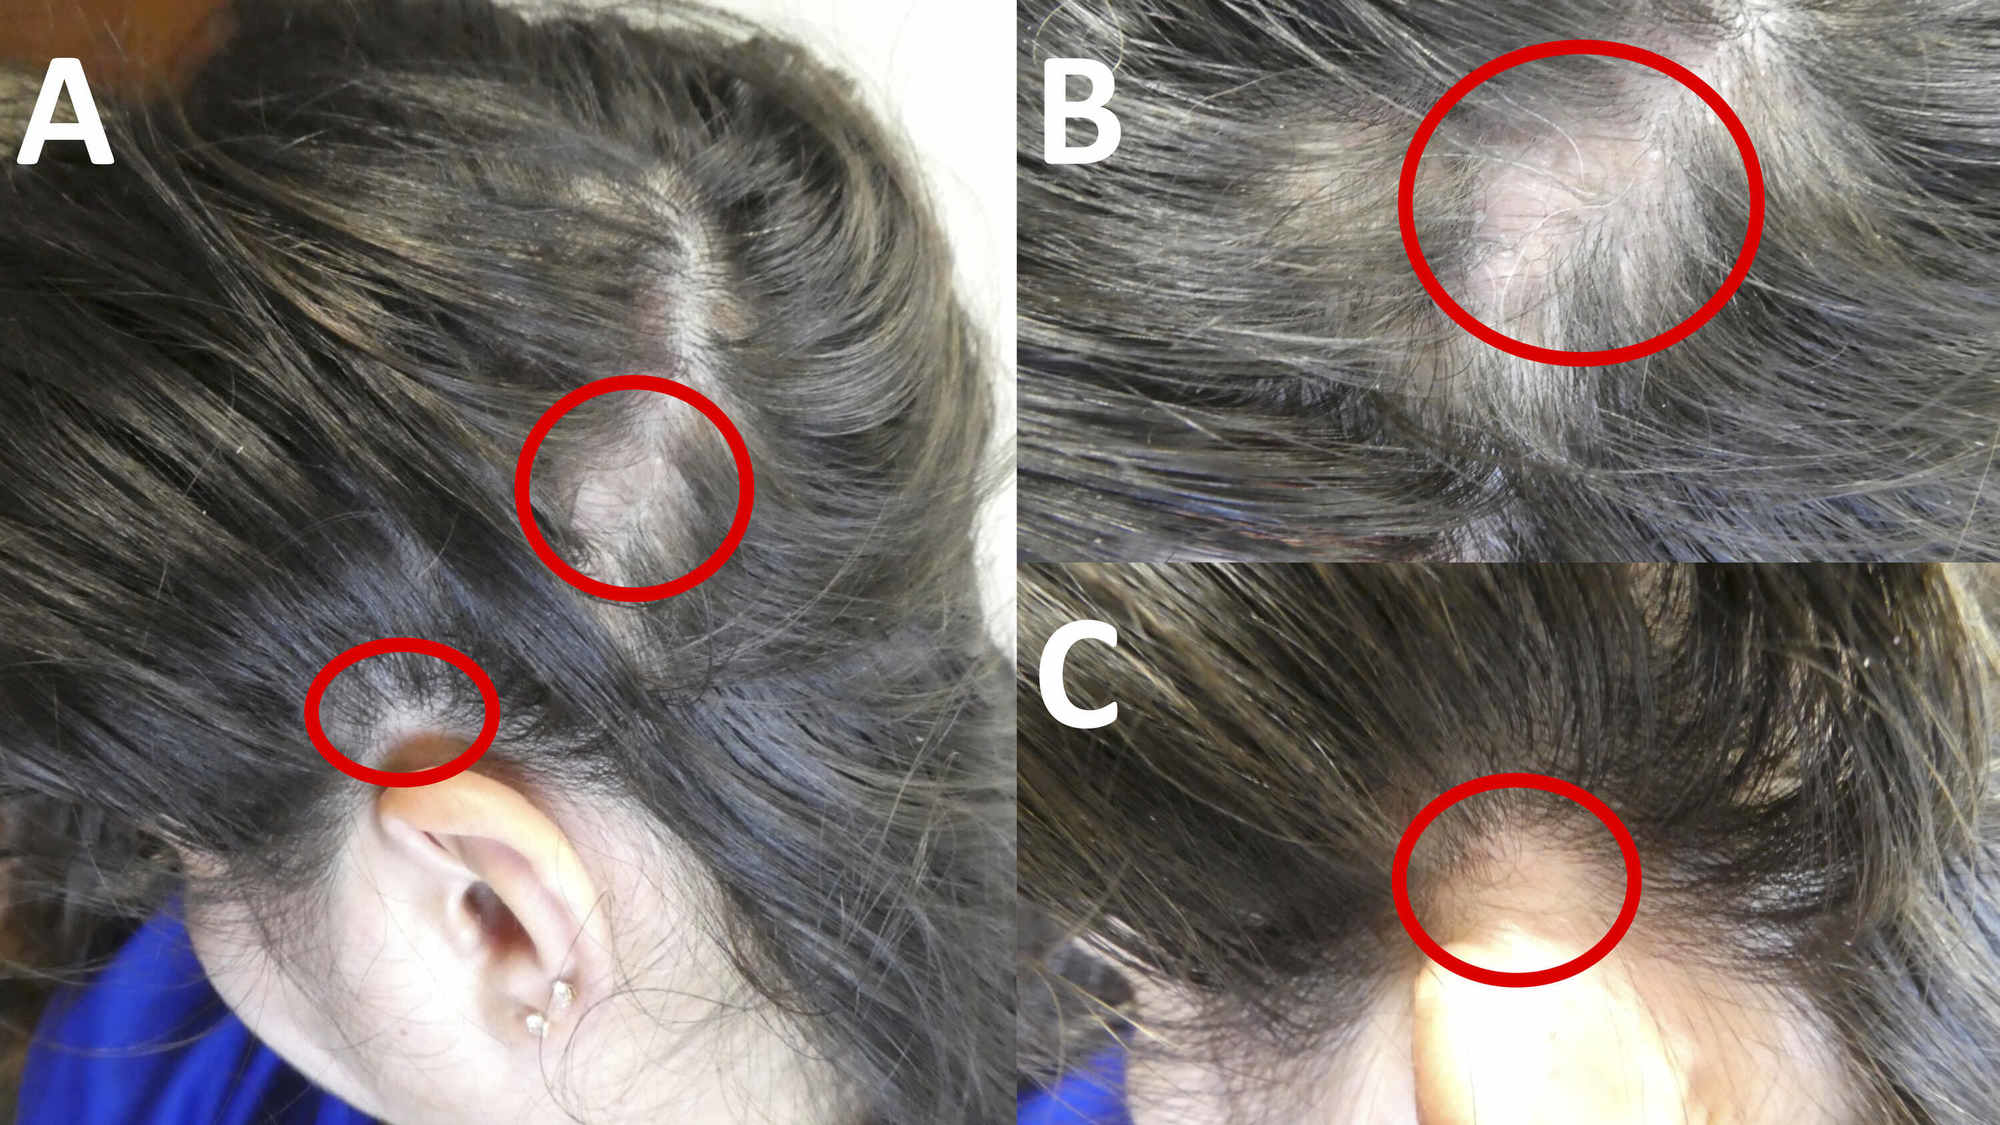 Cureus | Systemic Lupus Erythematosus Presenting as Alopecia Areata |  Article